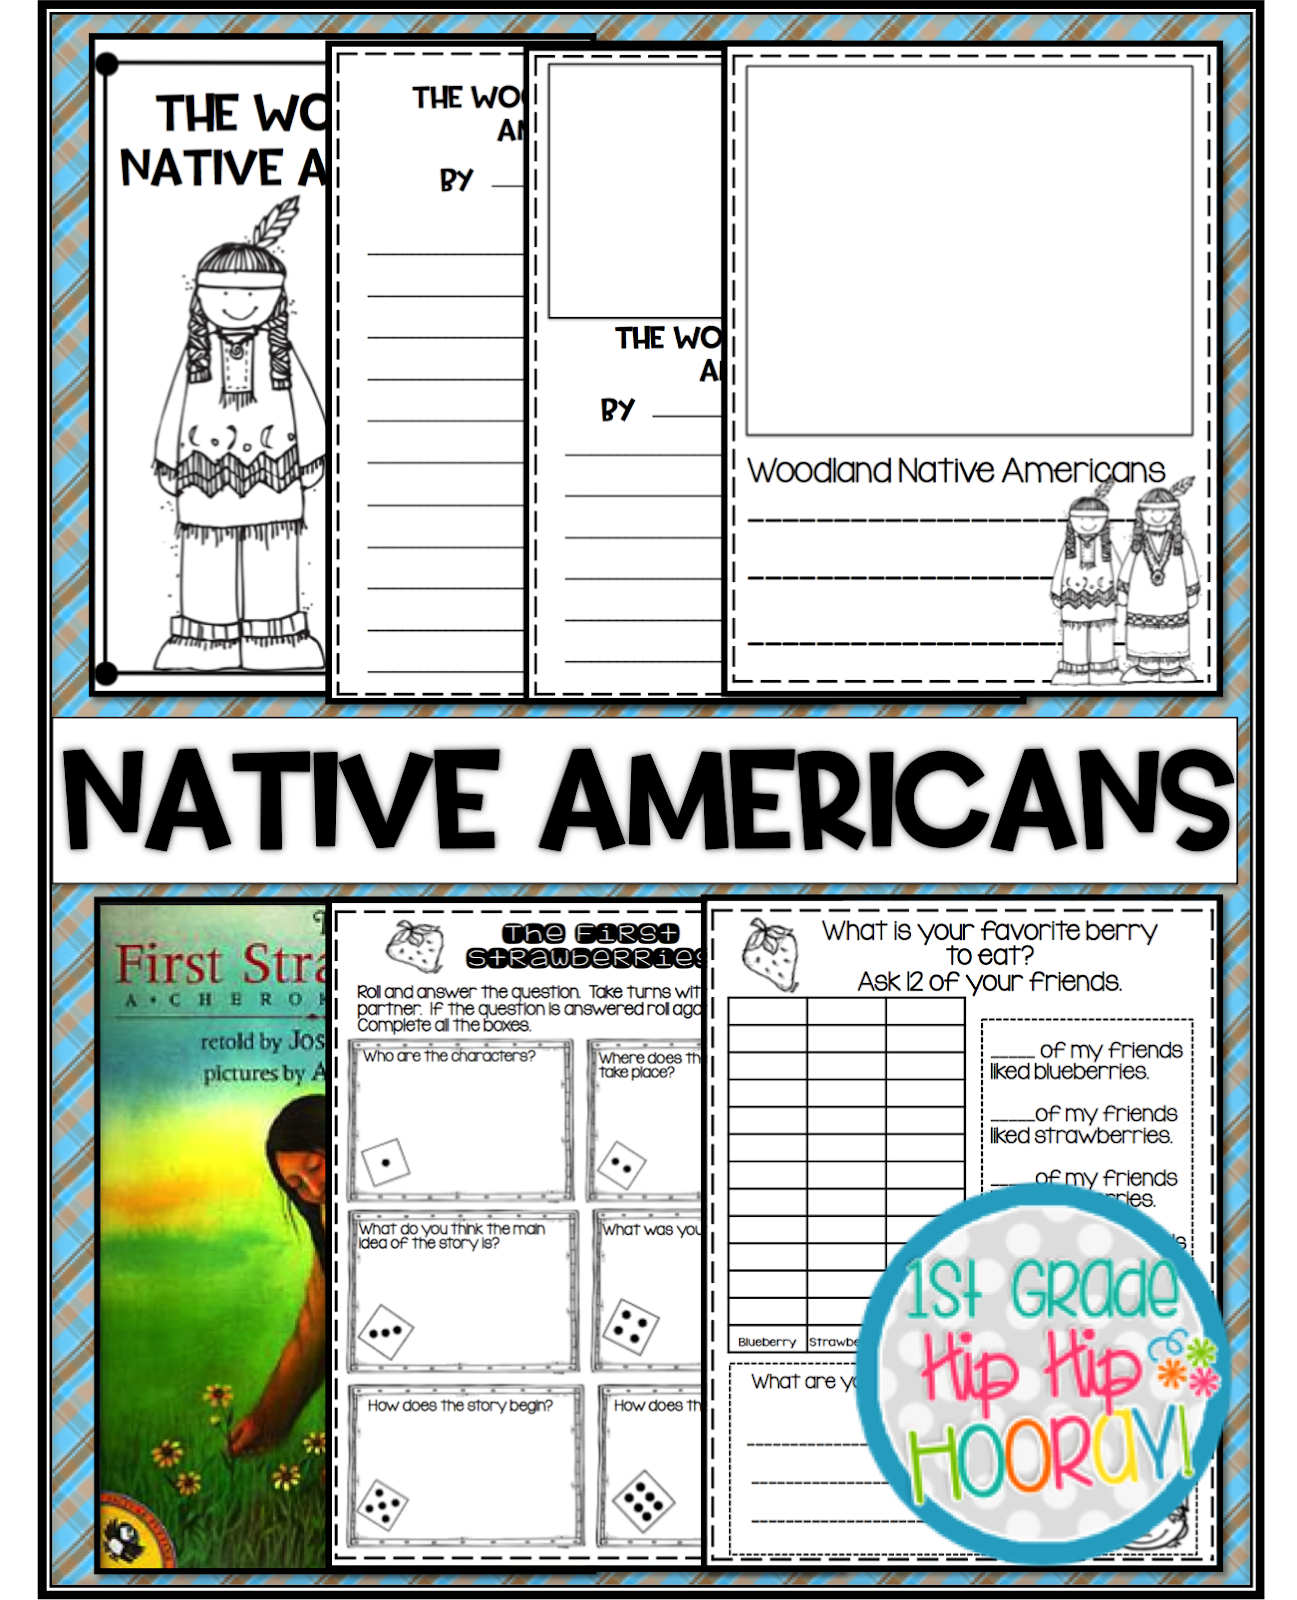 understanding native american text assignment